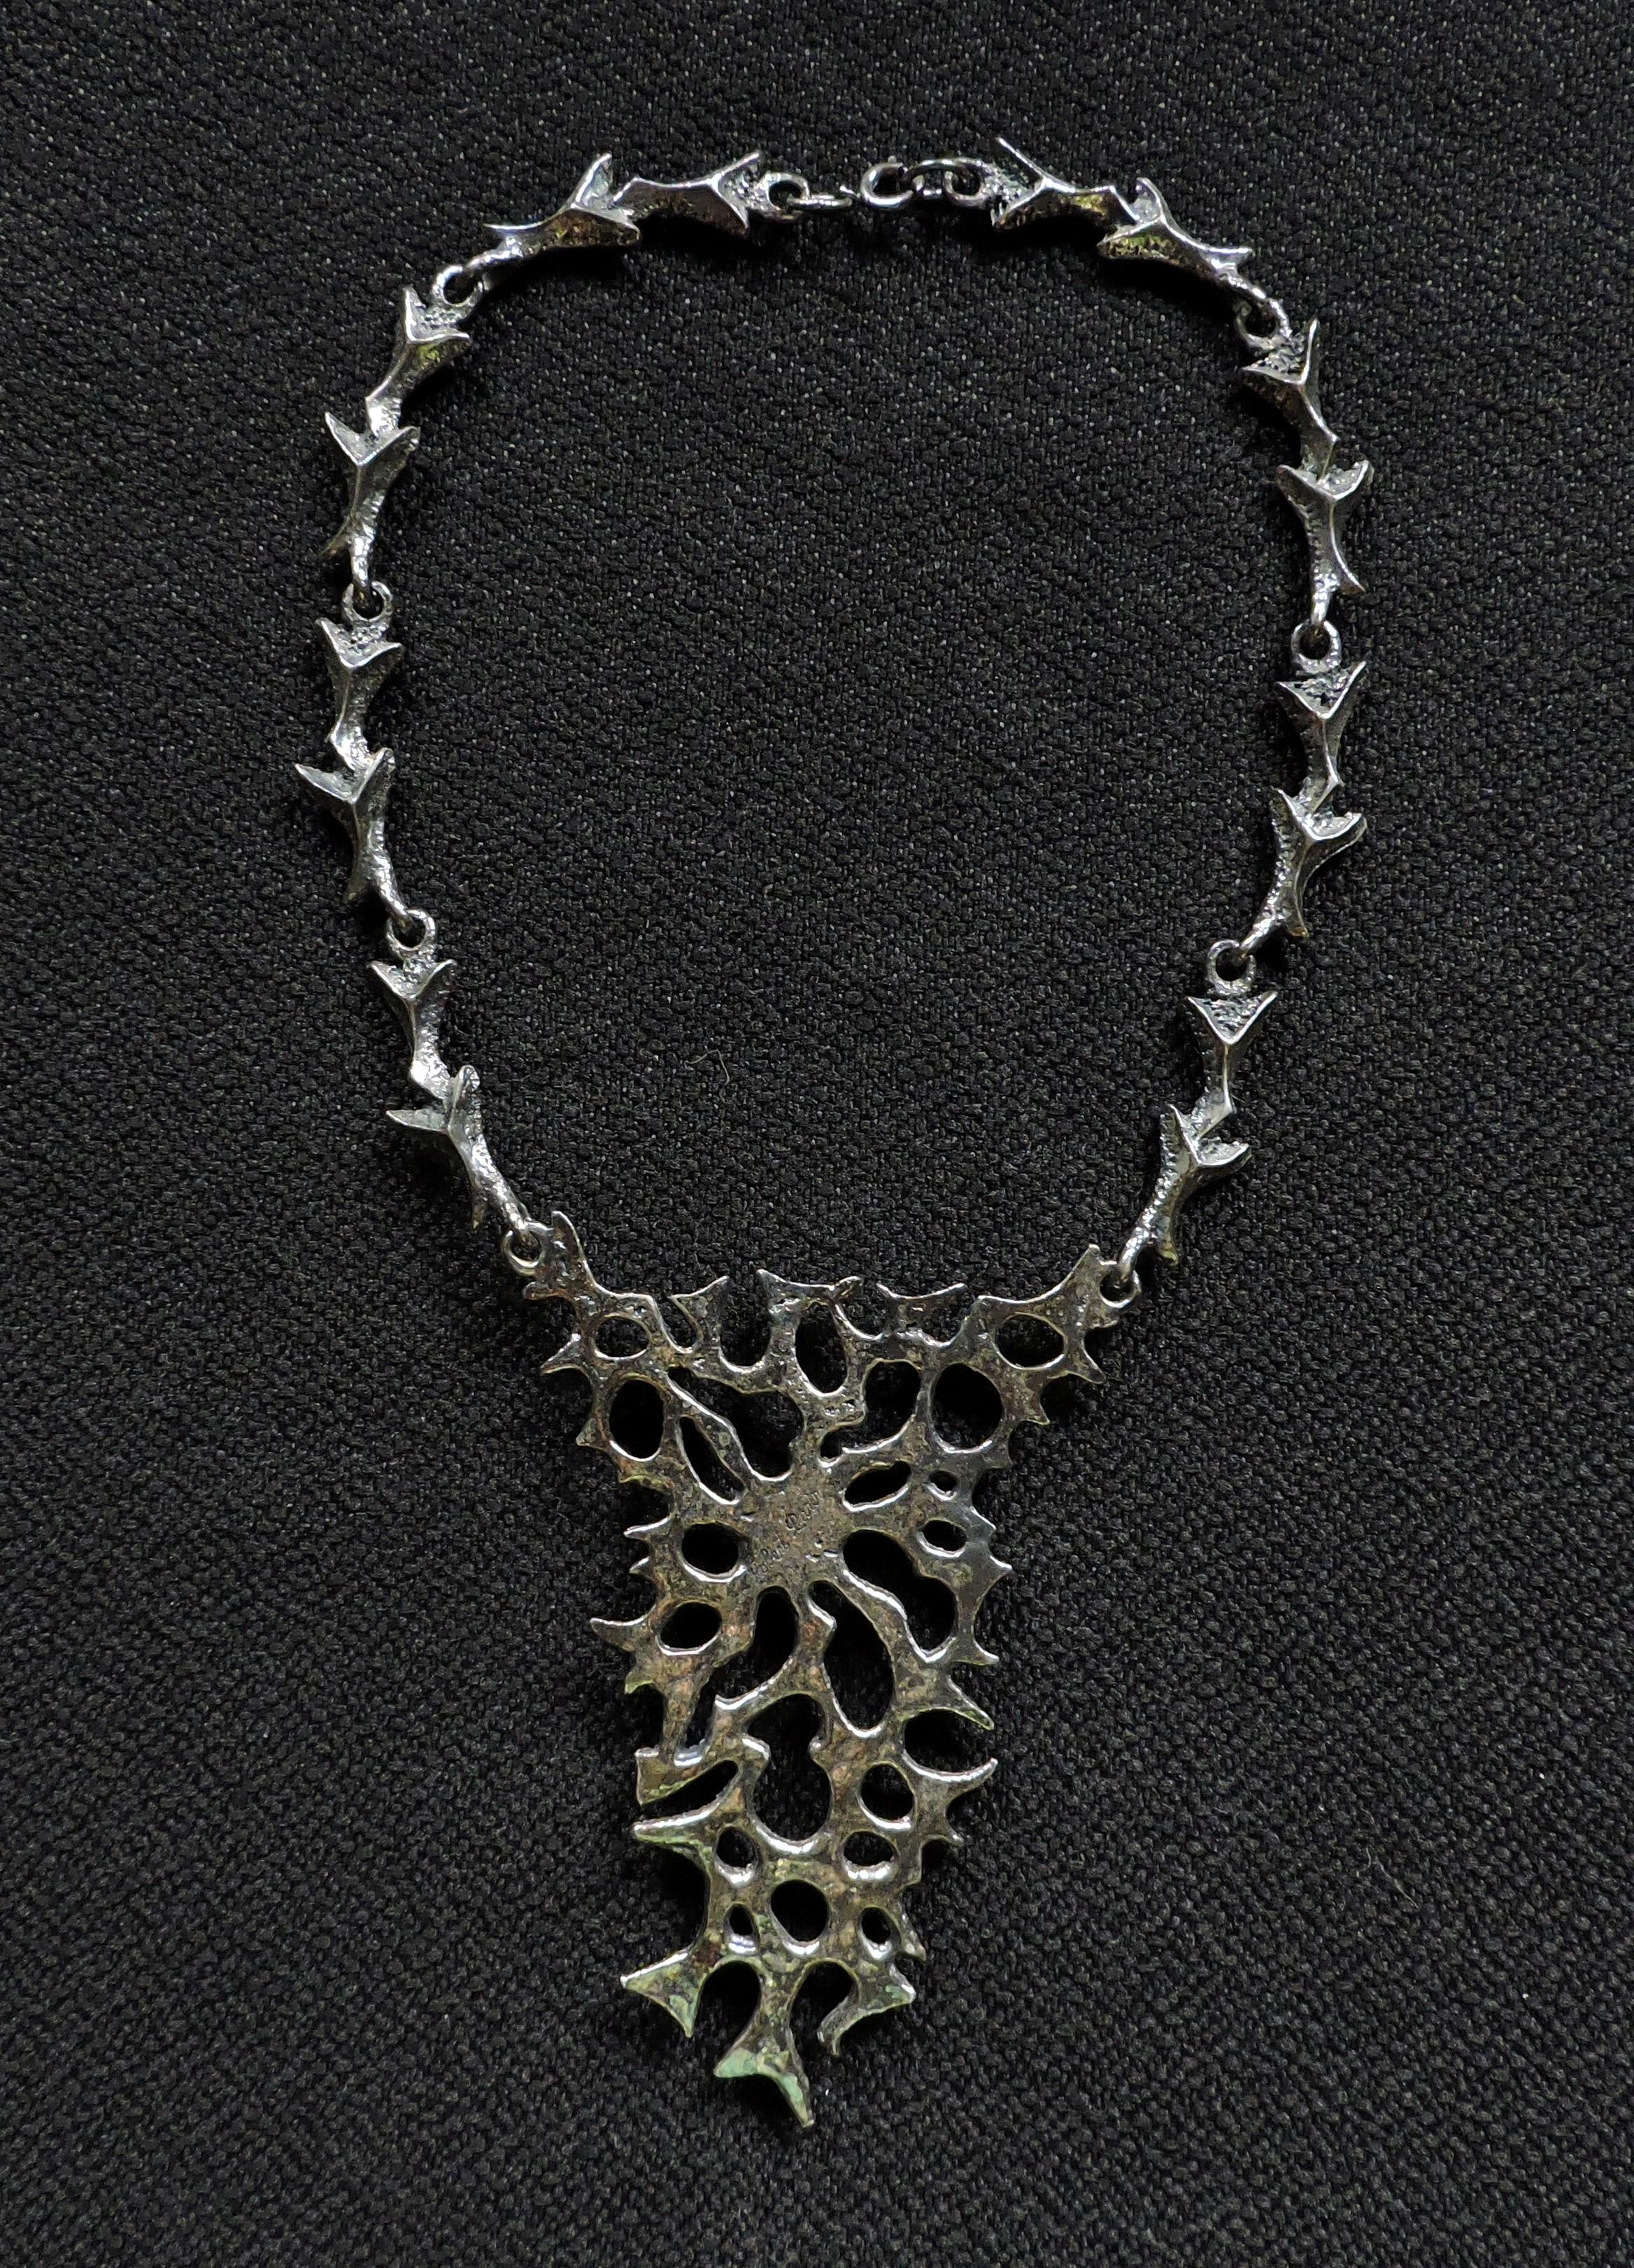 Late 20th Century Robert Larin Brutalist Modernist Sculptural Bib Necklace, Canadian Art Jewelry